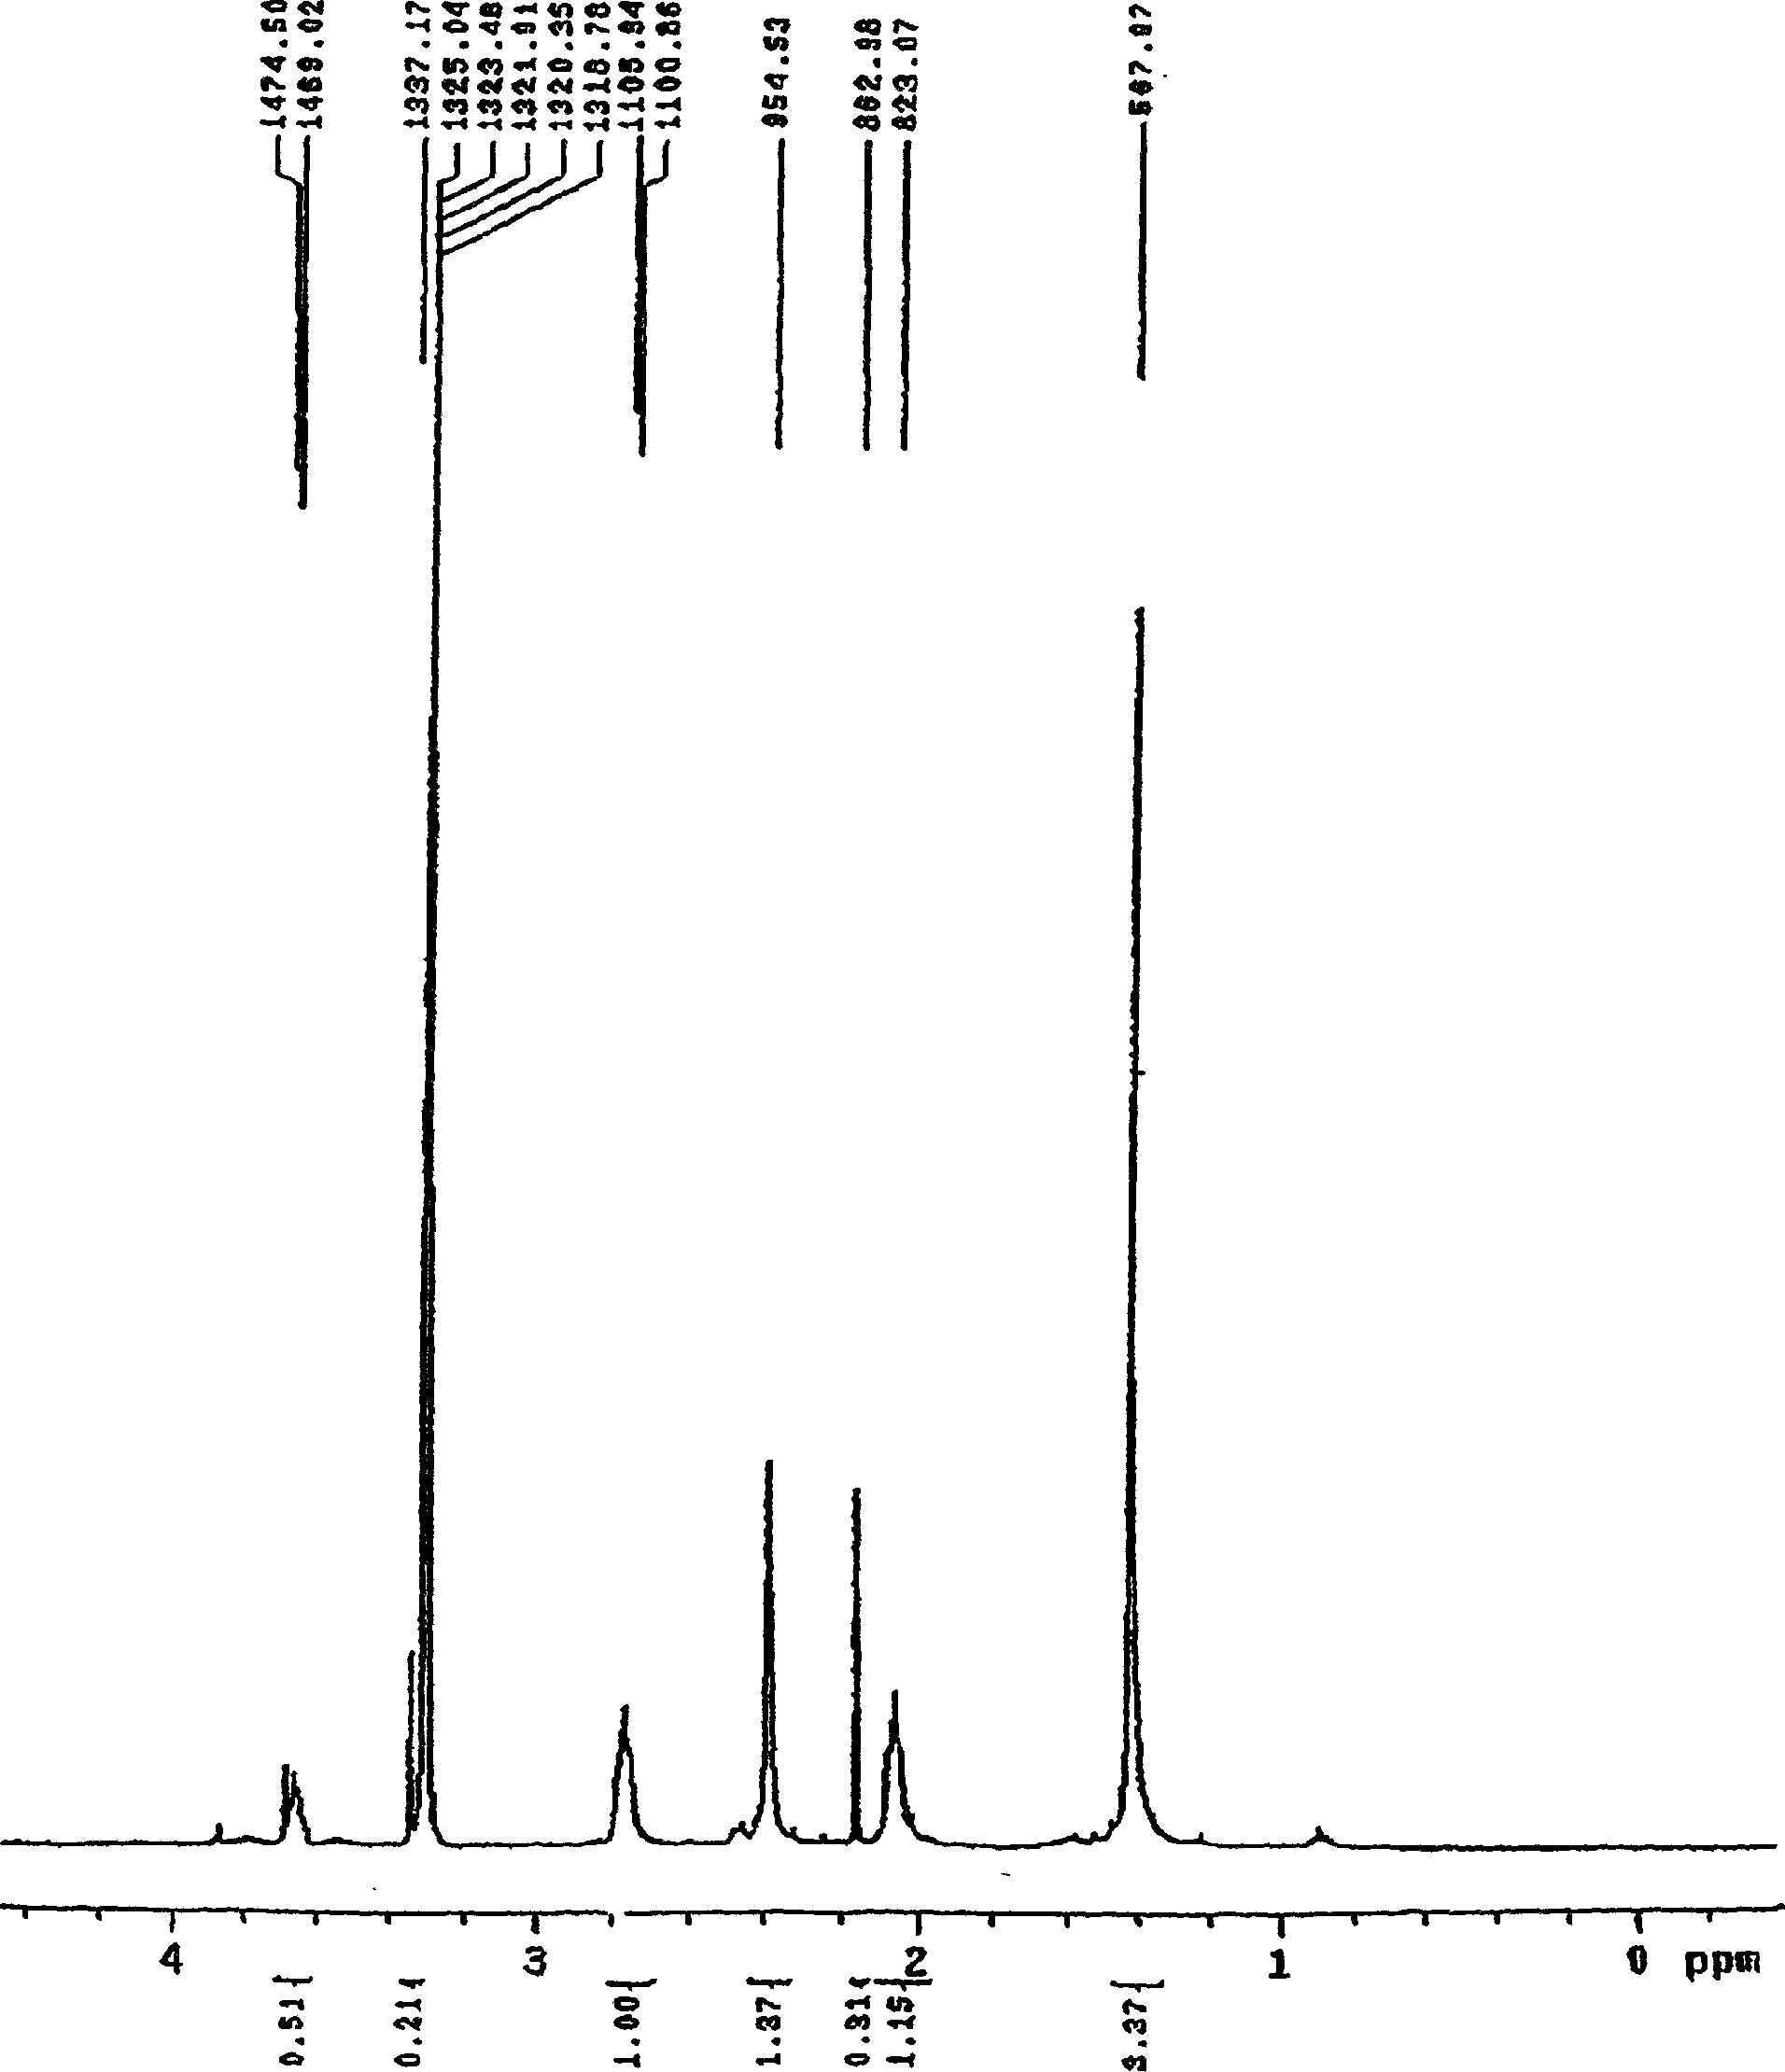 Hydroxy tanshinone IIA sodium sulfonate and its application